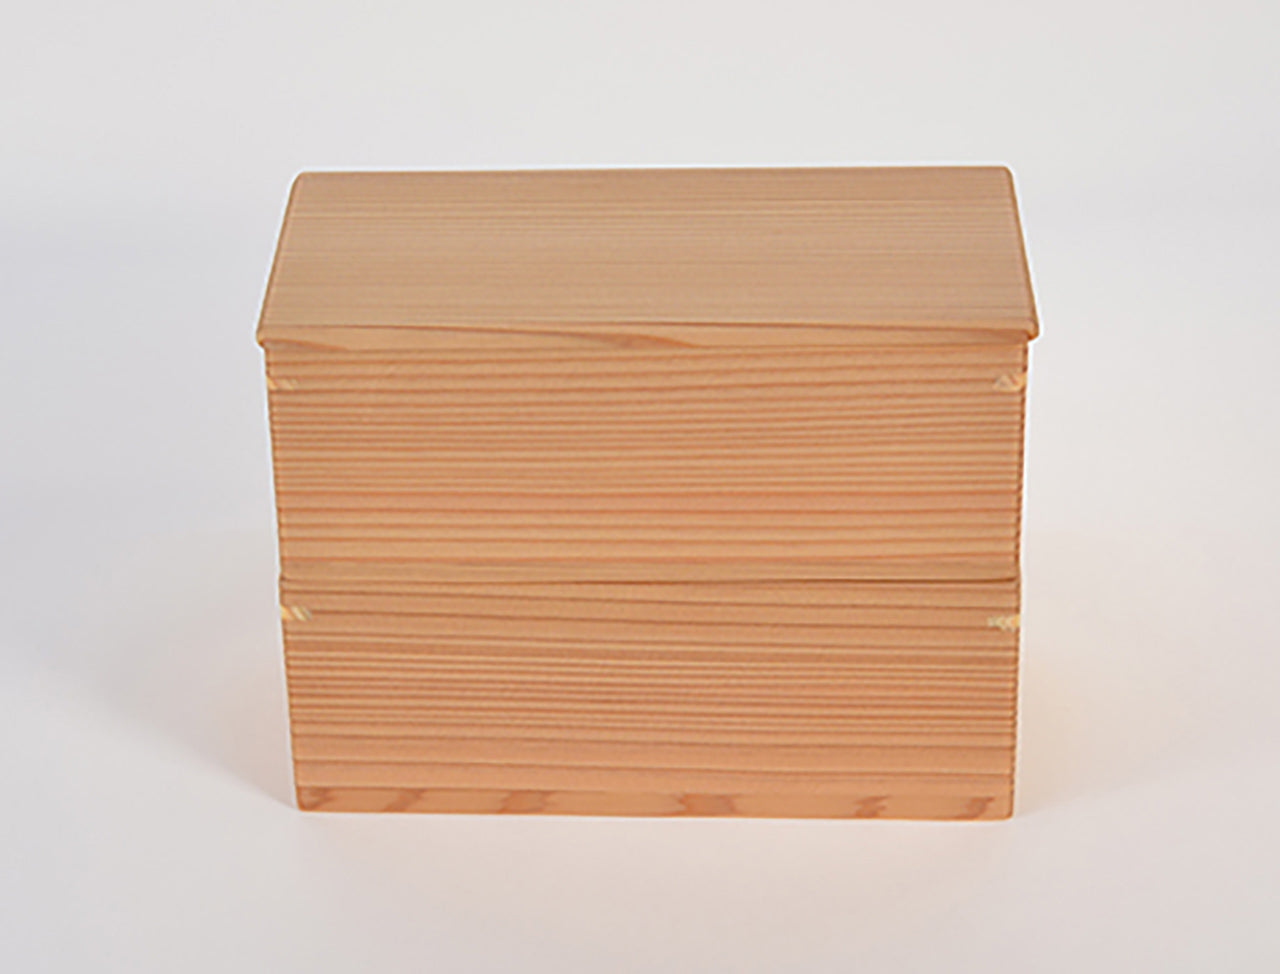 Box, Lunch box Chigiri, 2-tiered Small, Bento - Odate bentwood, Wood crafts